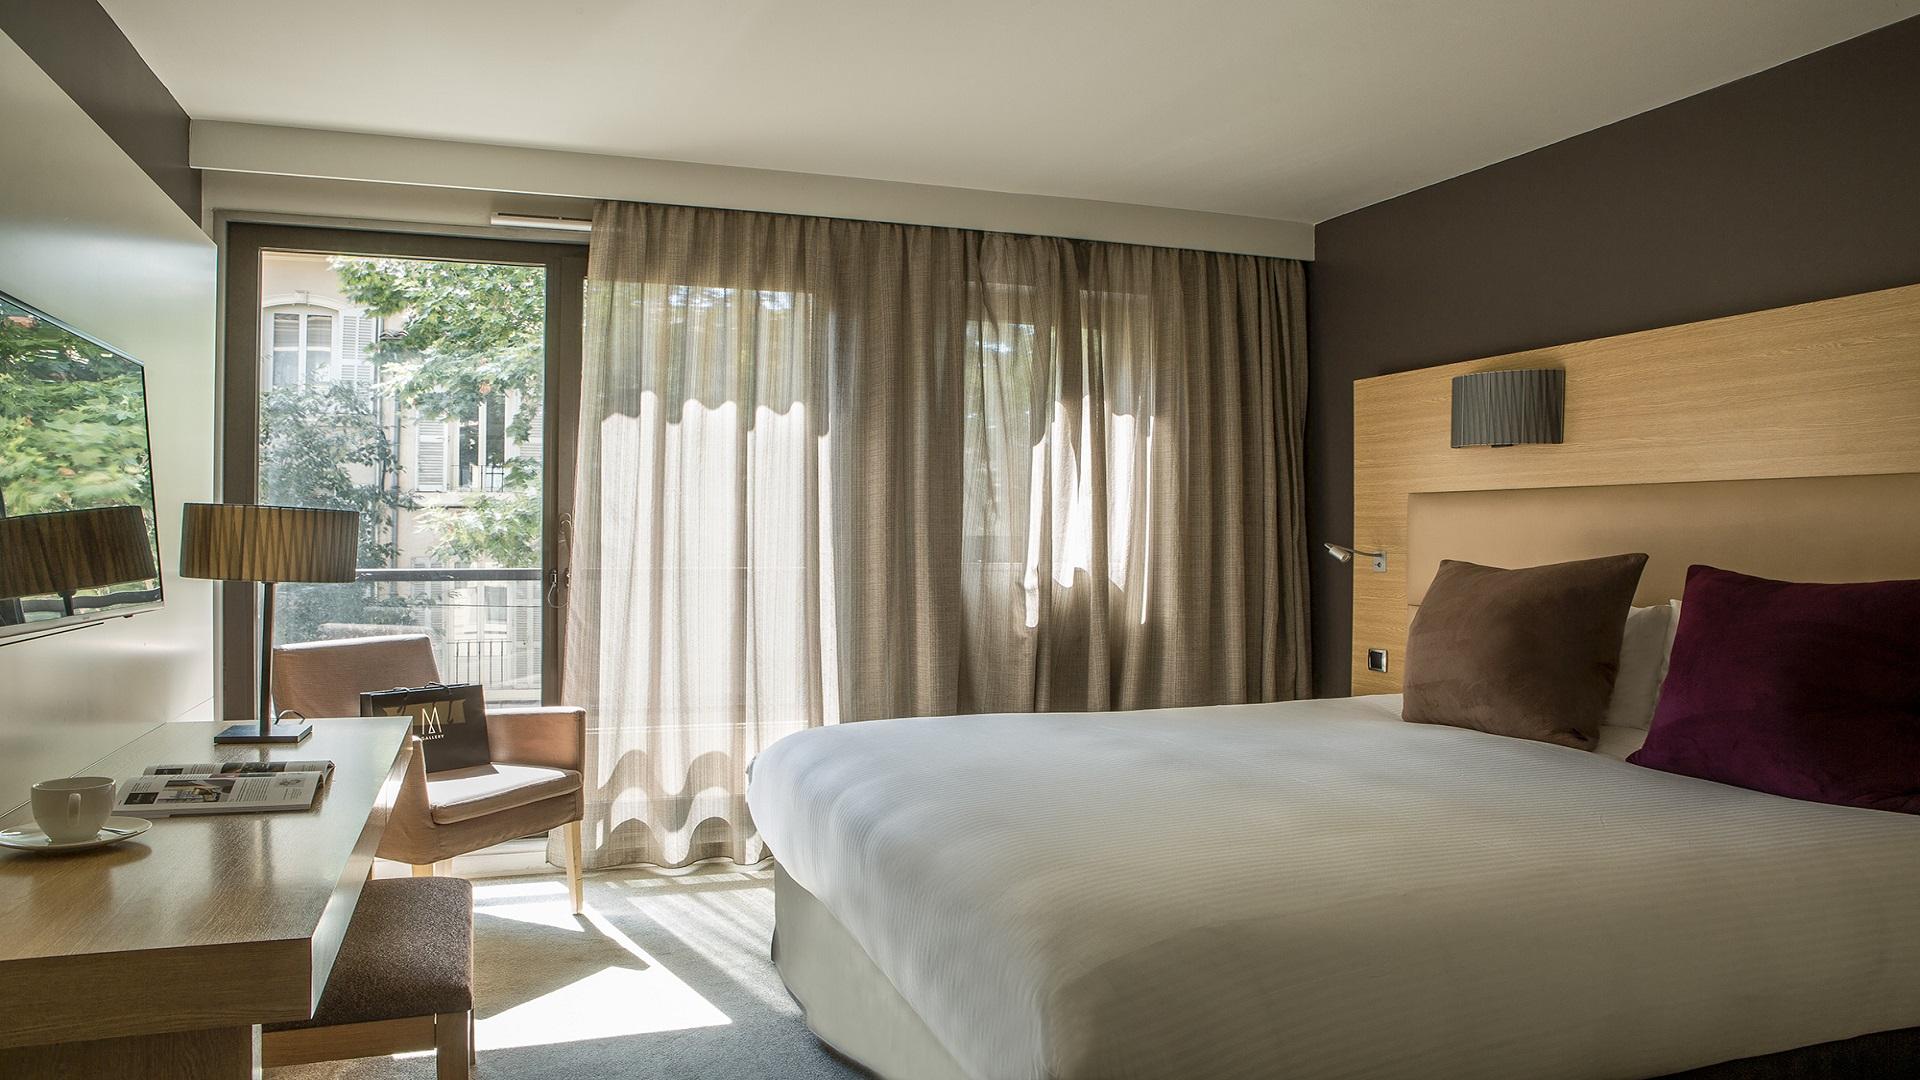 grand-hotel-roi-rene-aix-en-provence-paca-luberon-chambres-seminaires-de-caractere.jpg